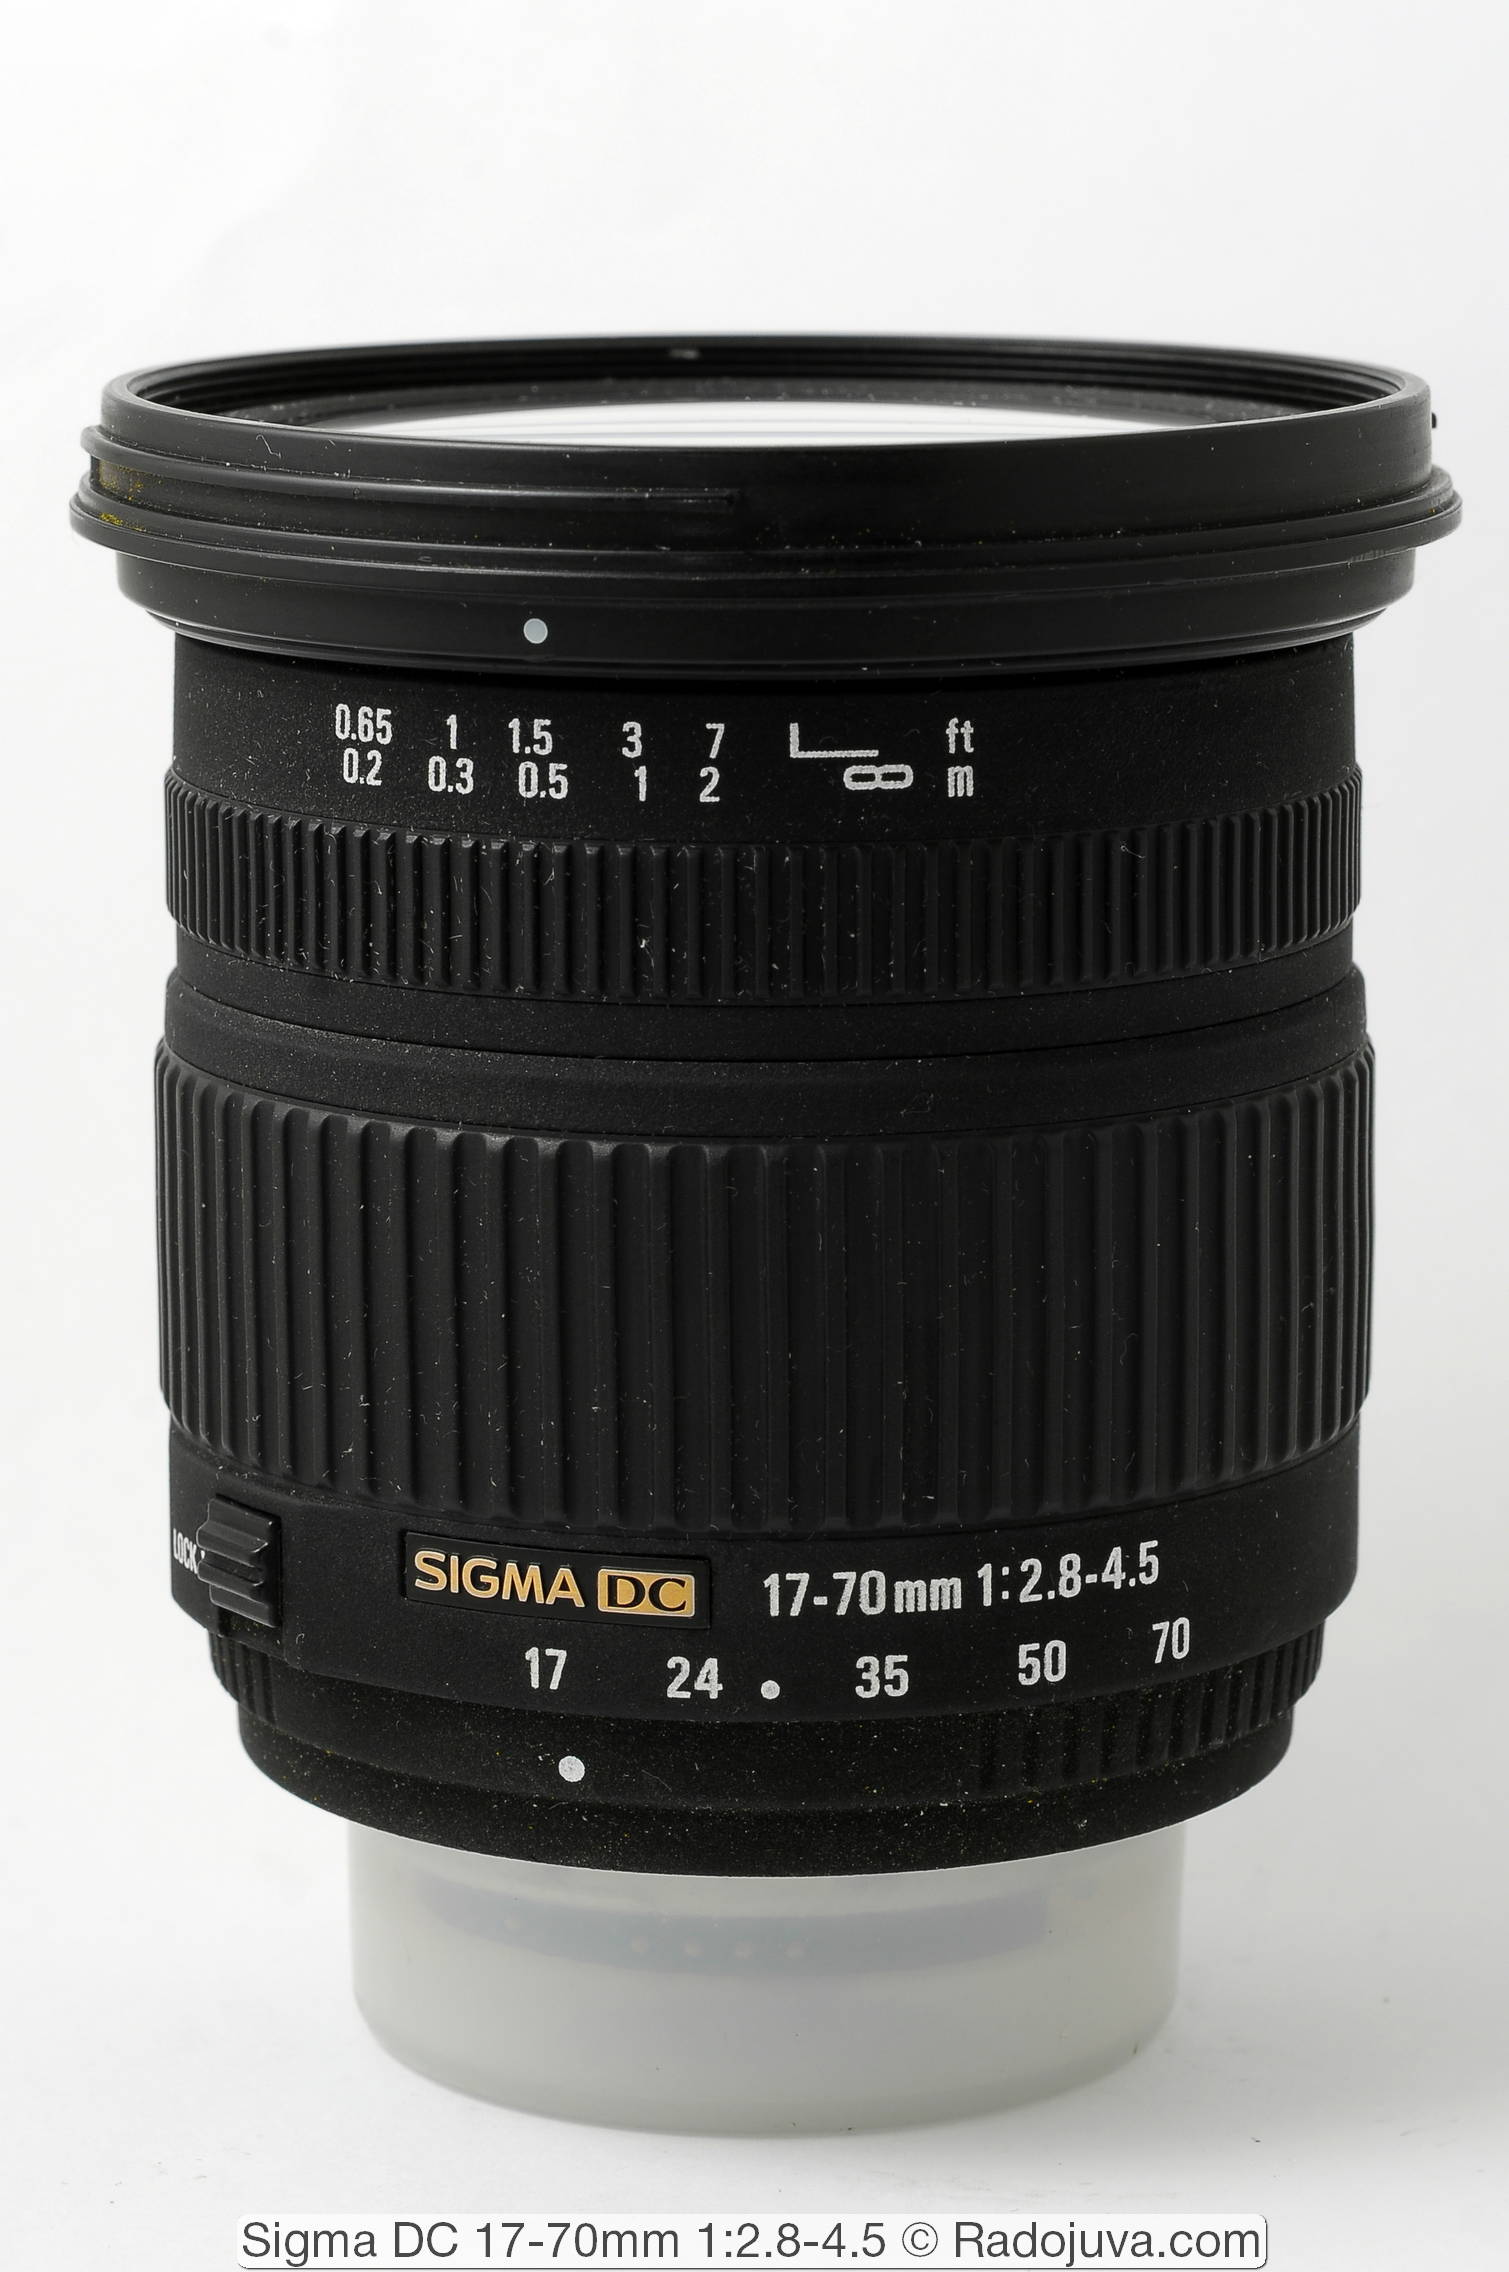 Sigma DC 17-70mm 1:2.8-4.5